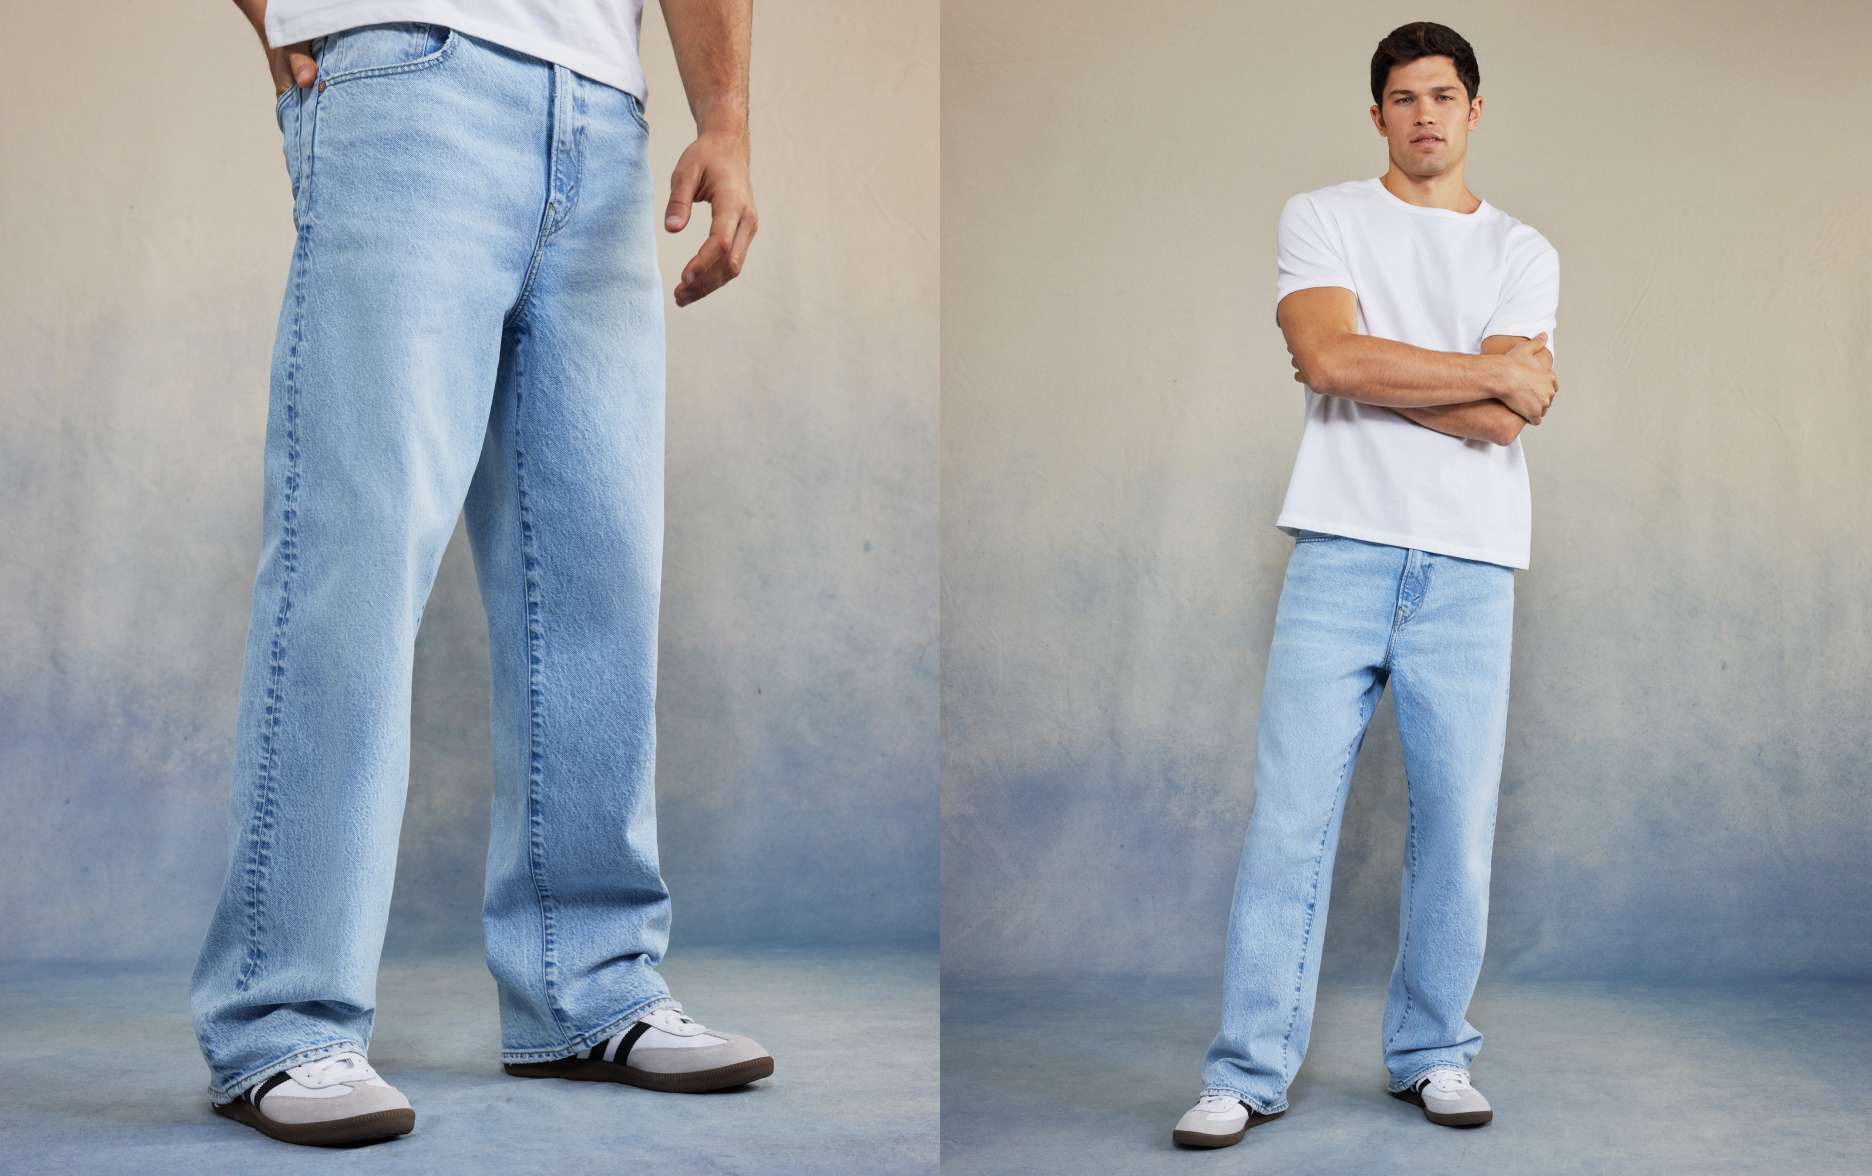 Baggy Jeans- Light Blue Baggy Fit Denim Jeans for Men Online